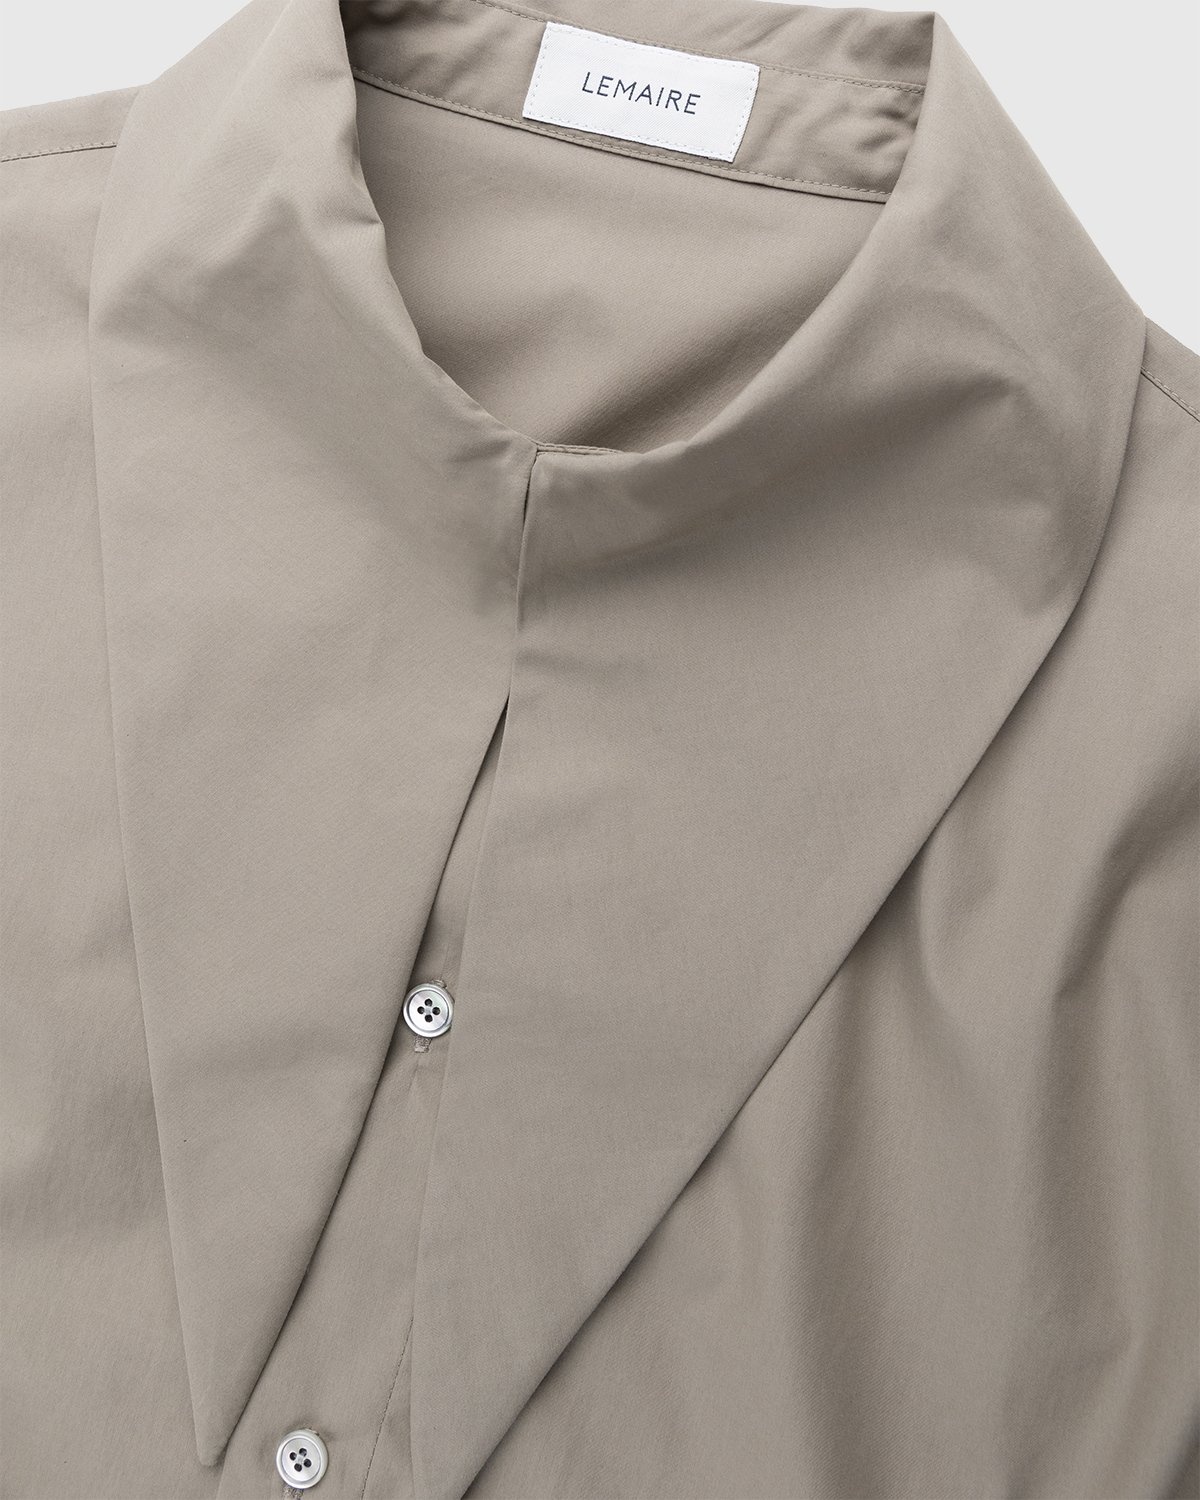 Lemaire – Tie Neck Shirt Greige - Longsleeve Shirts - Beige - Image 5